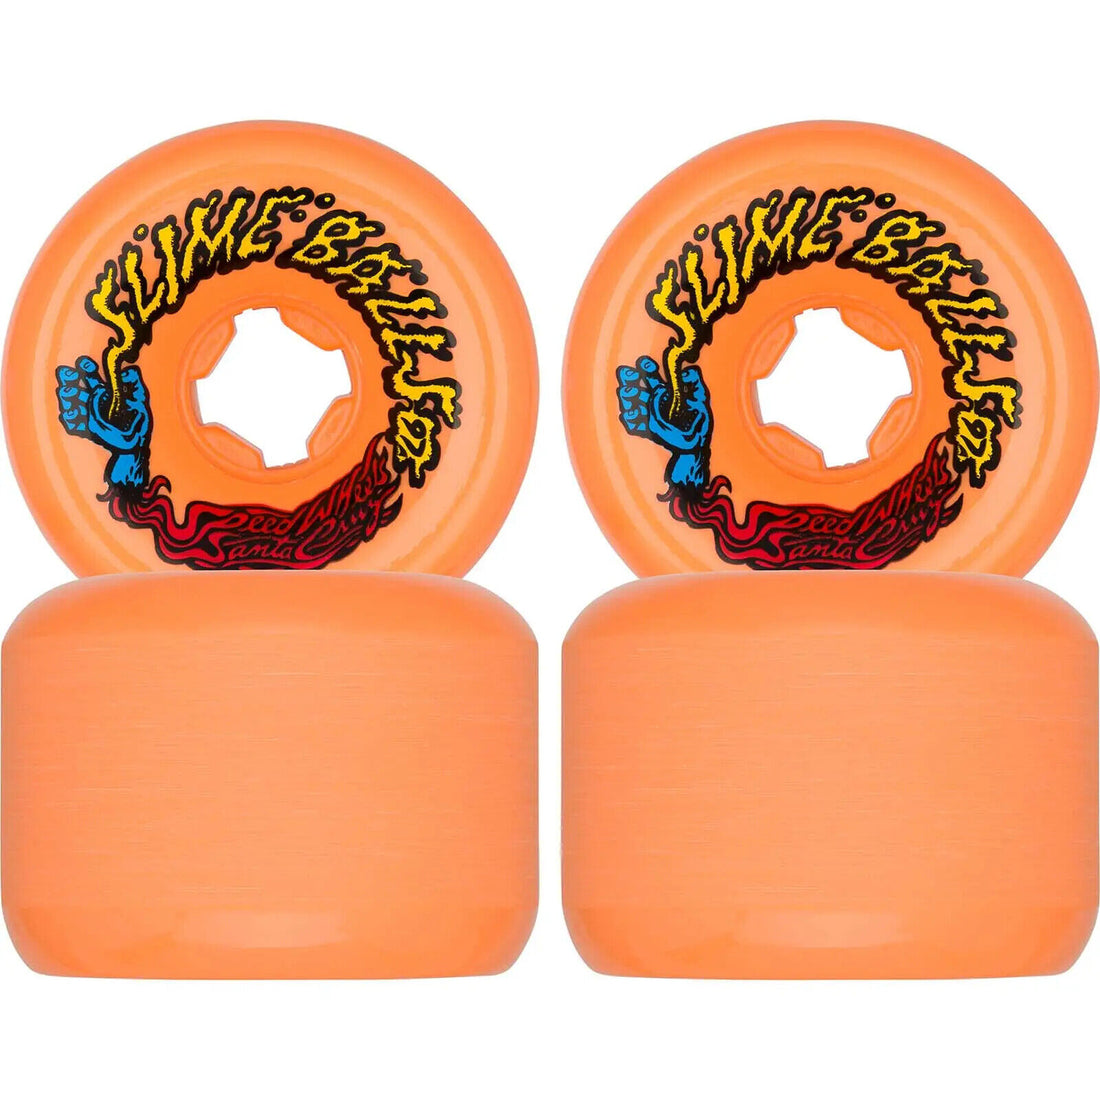 Santa Cruz Slime Balls Vomits Skateboard Wheels - Orange 60mm